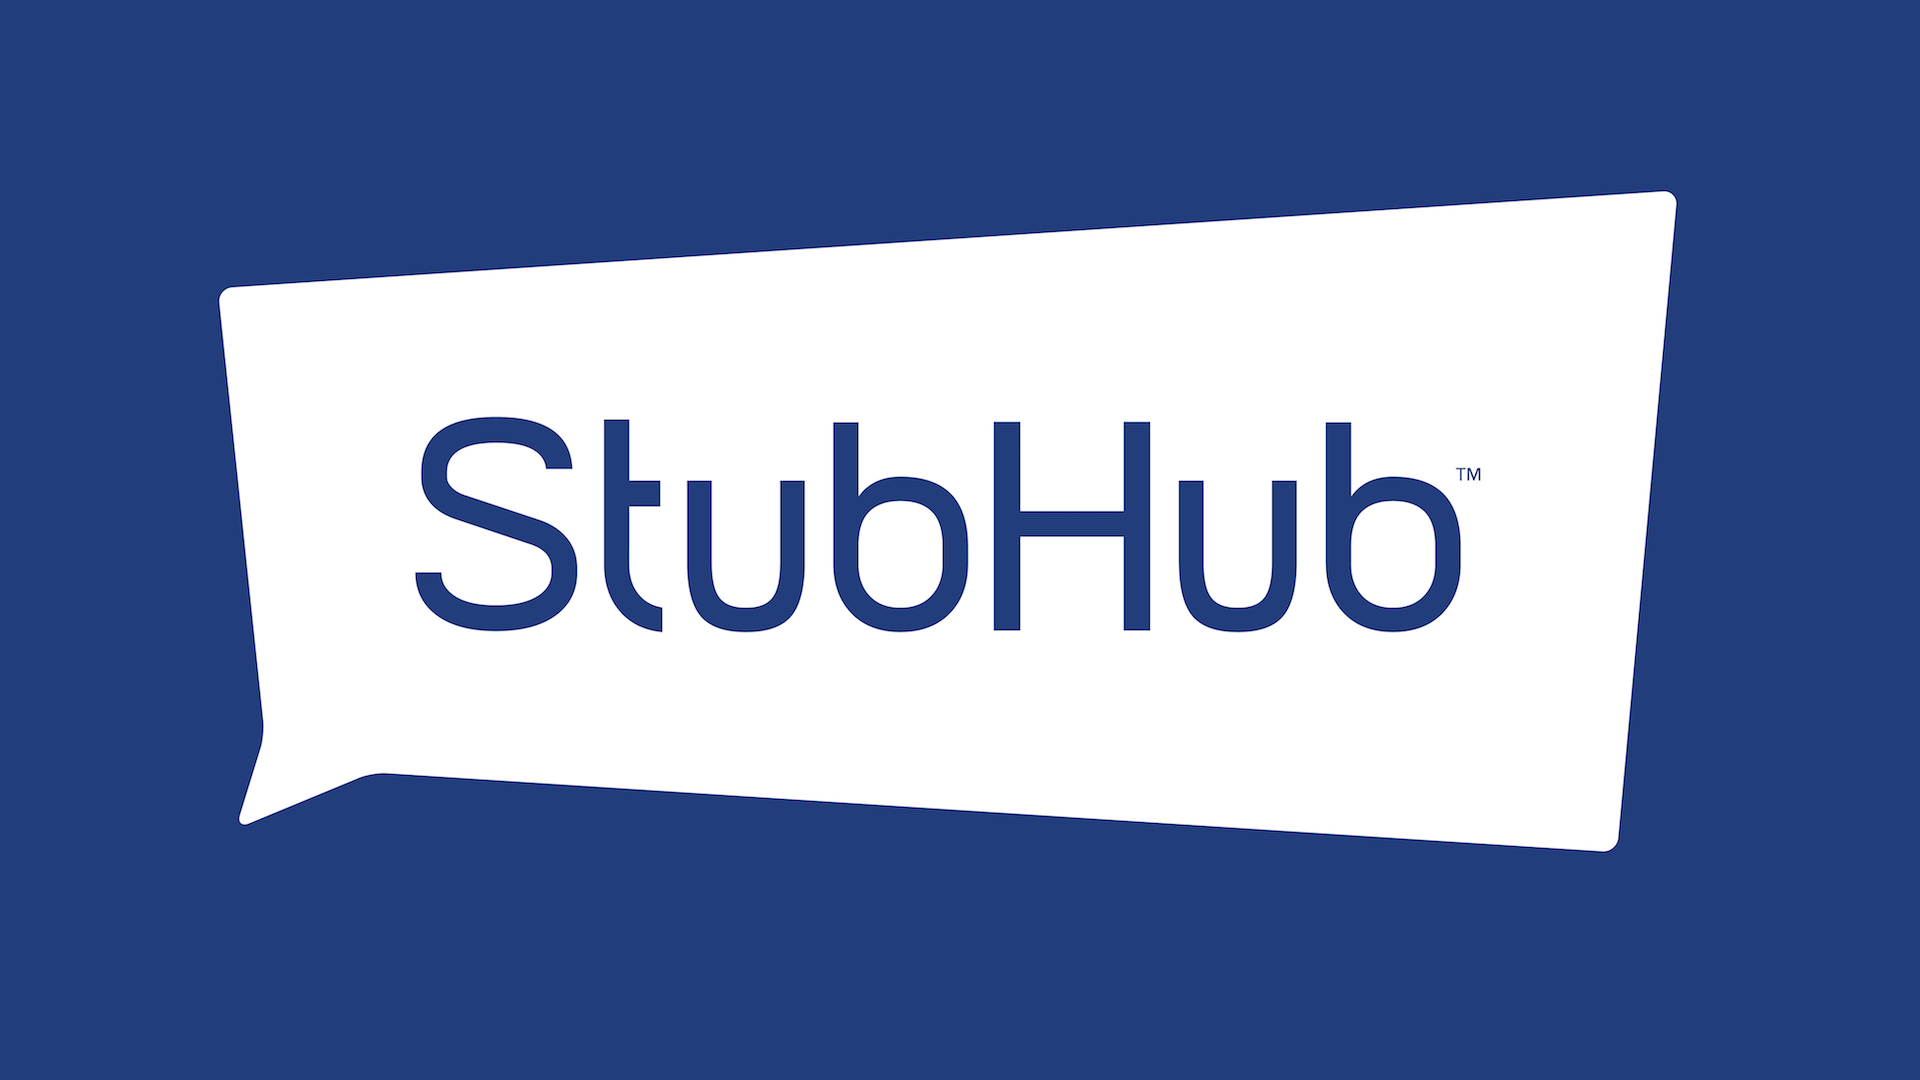 StubHub Logo - A CMO's View: StubHub rebrands itself to show it is more than just